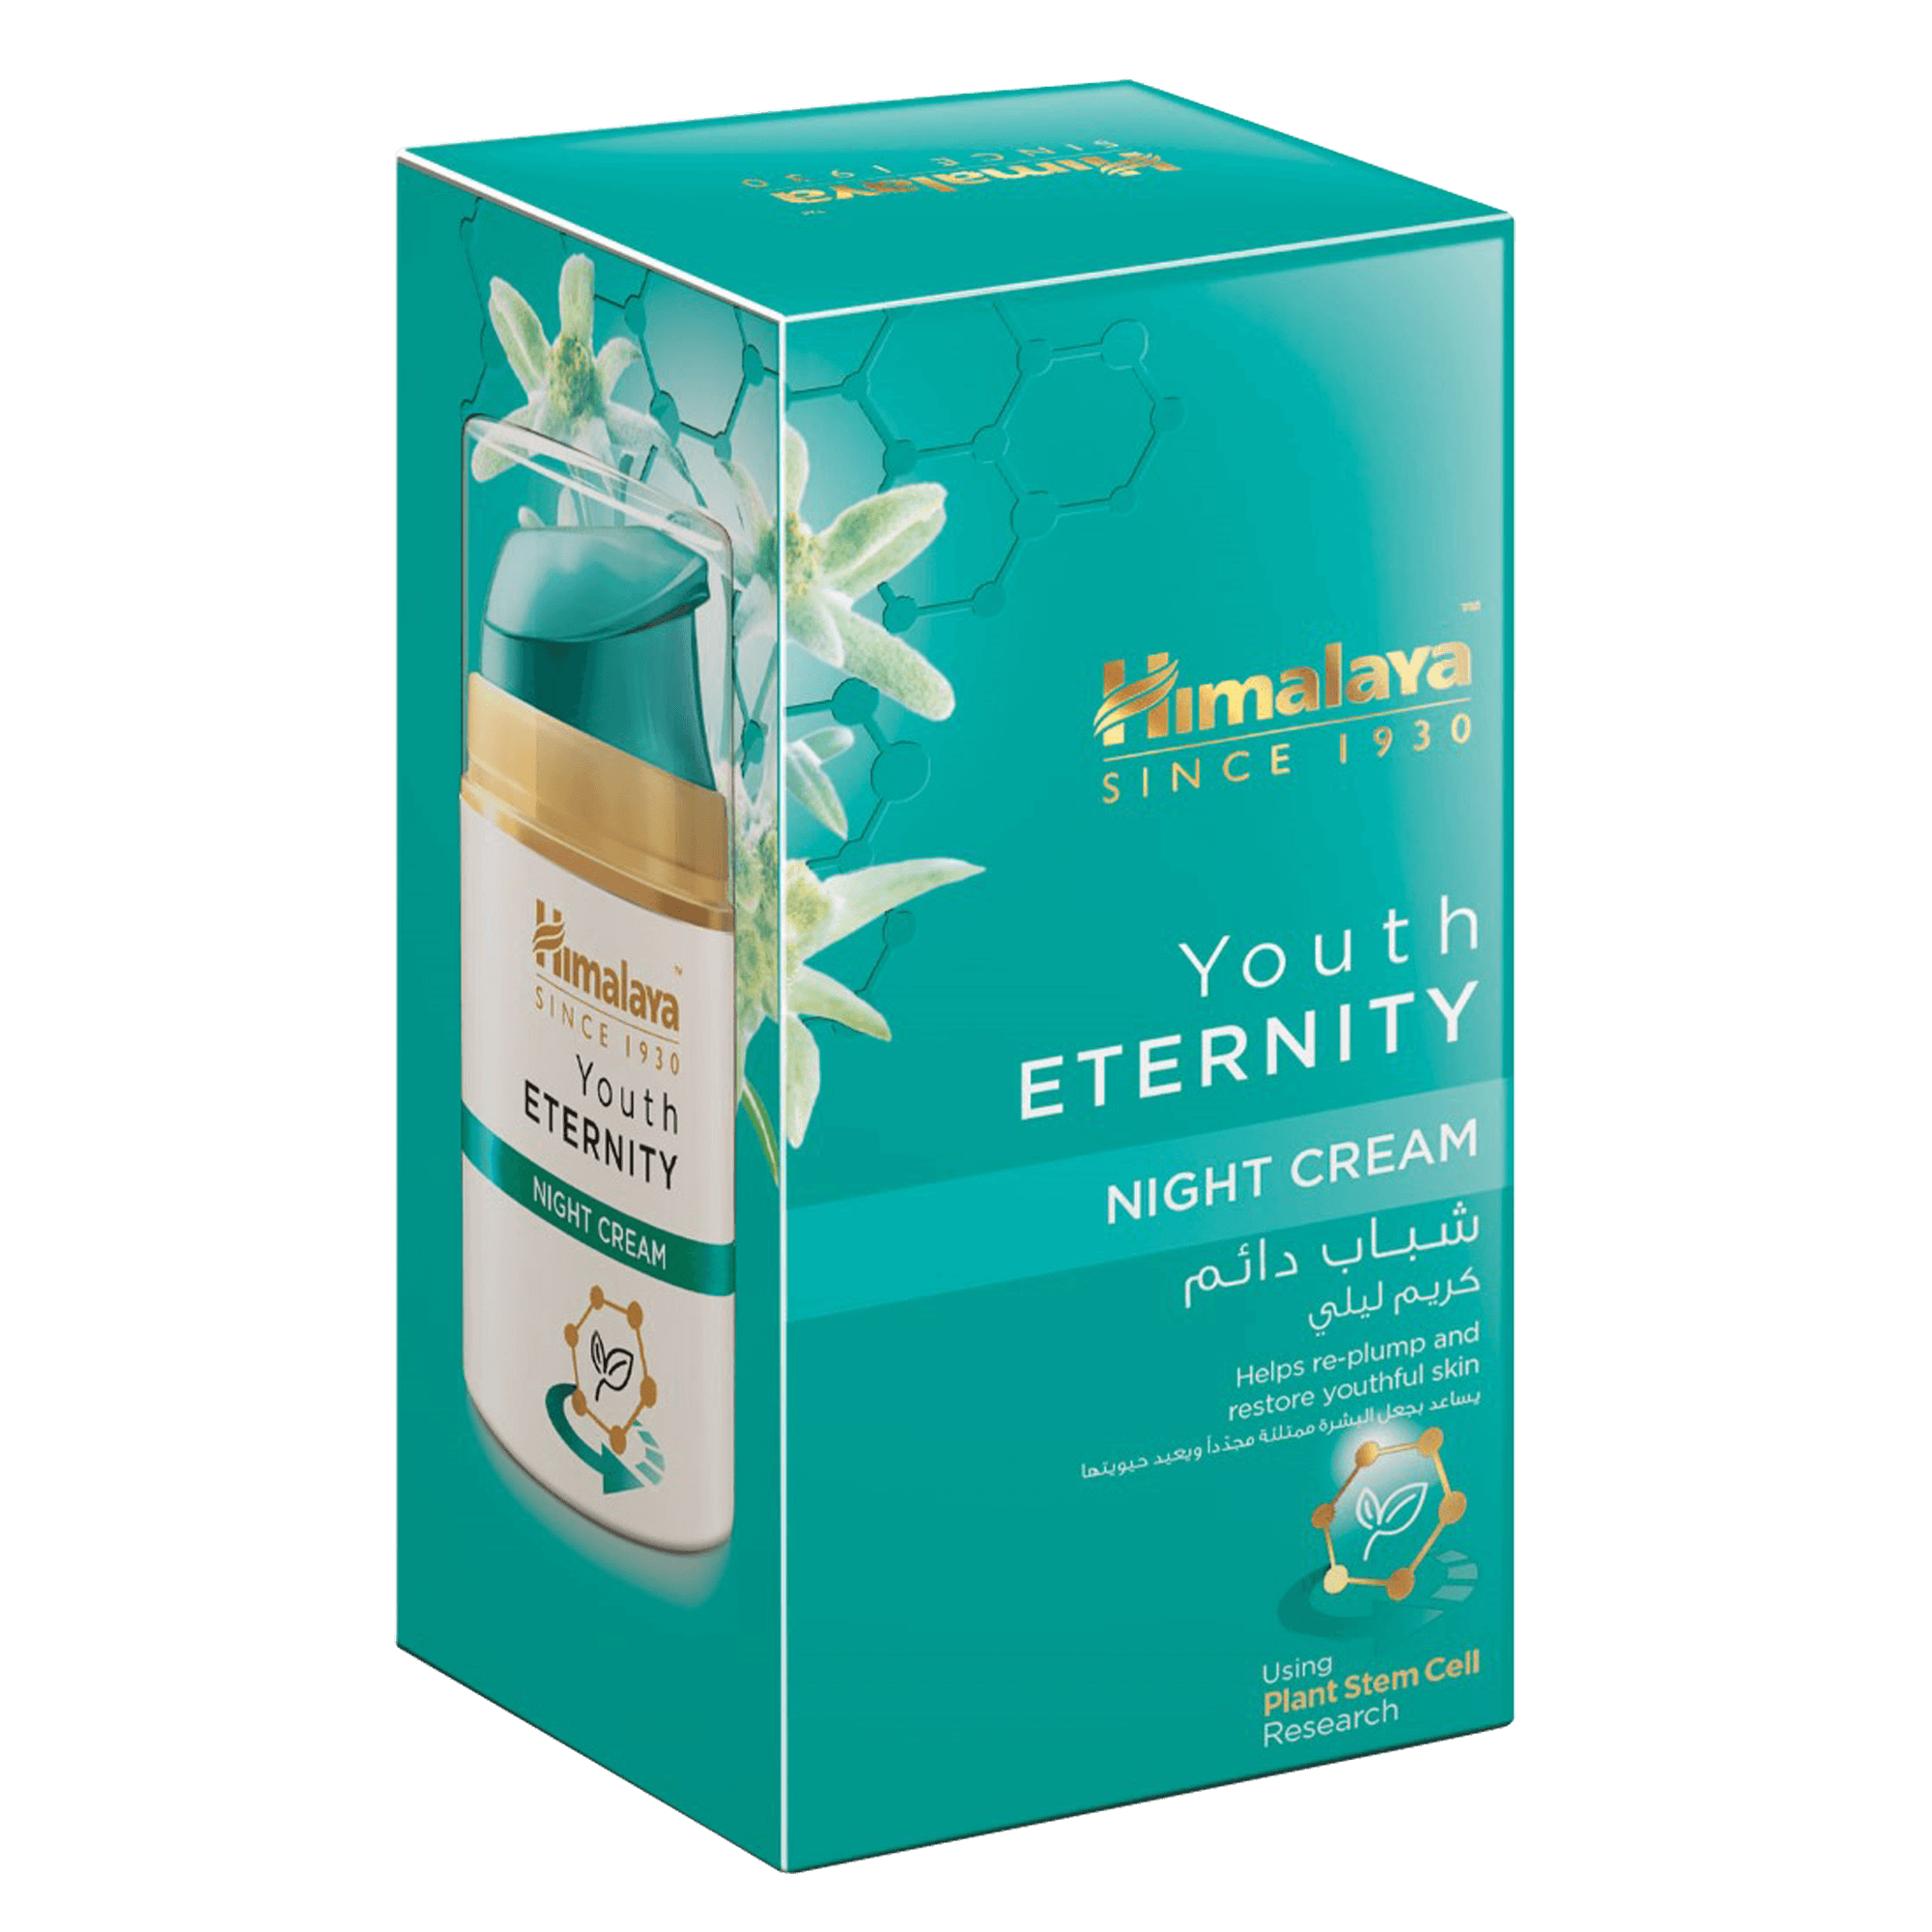 Himalaya Youth Eternity Night Cream 50g - Restores Youthful Skin